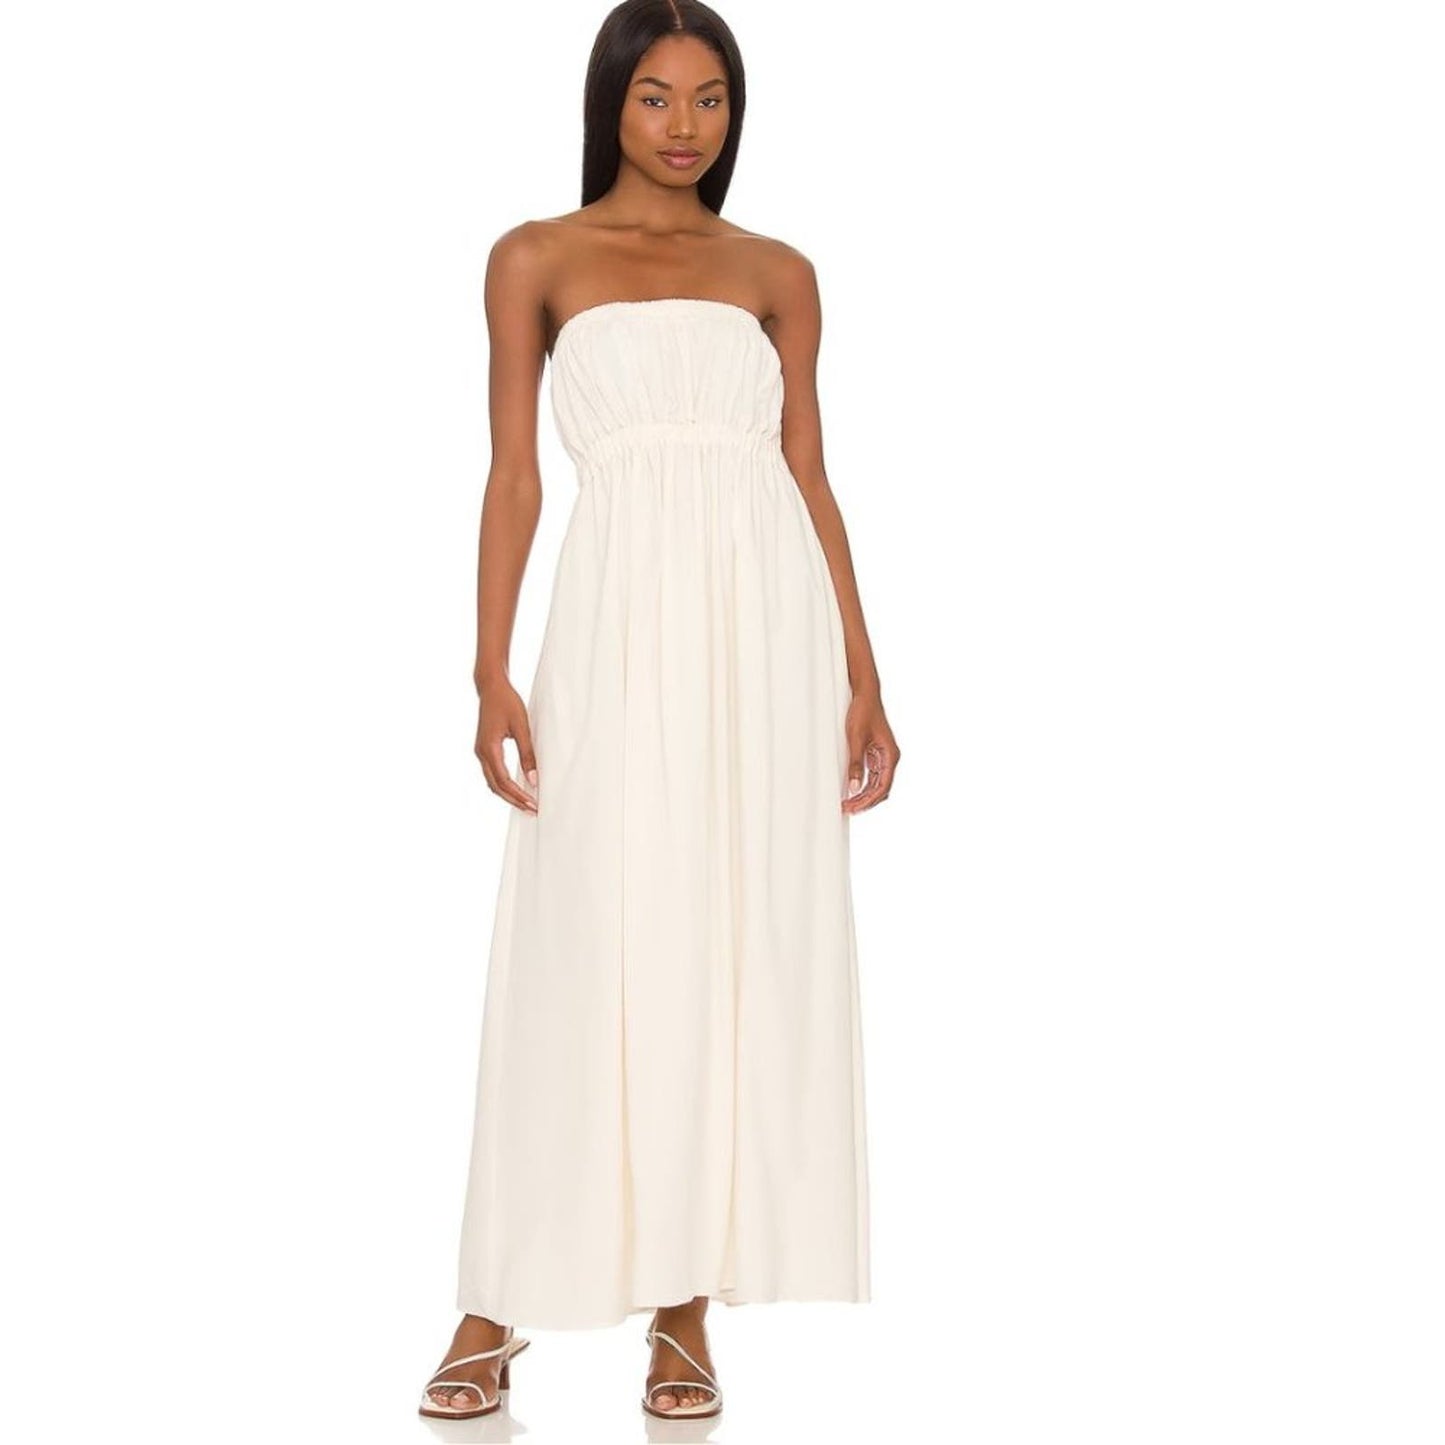 Merona Boho Ivory Lace Trim Maxi Dress NWT Size Small